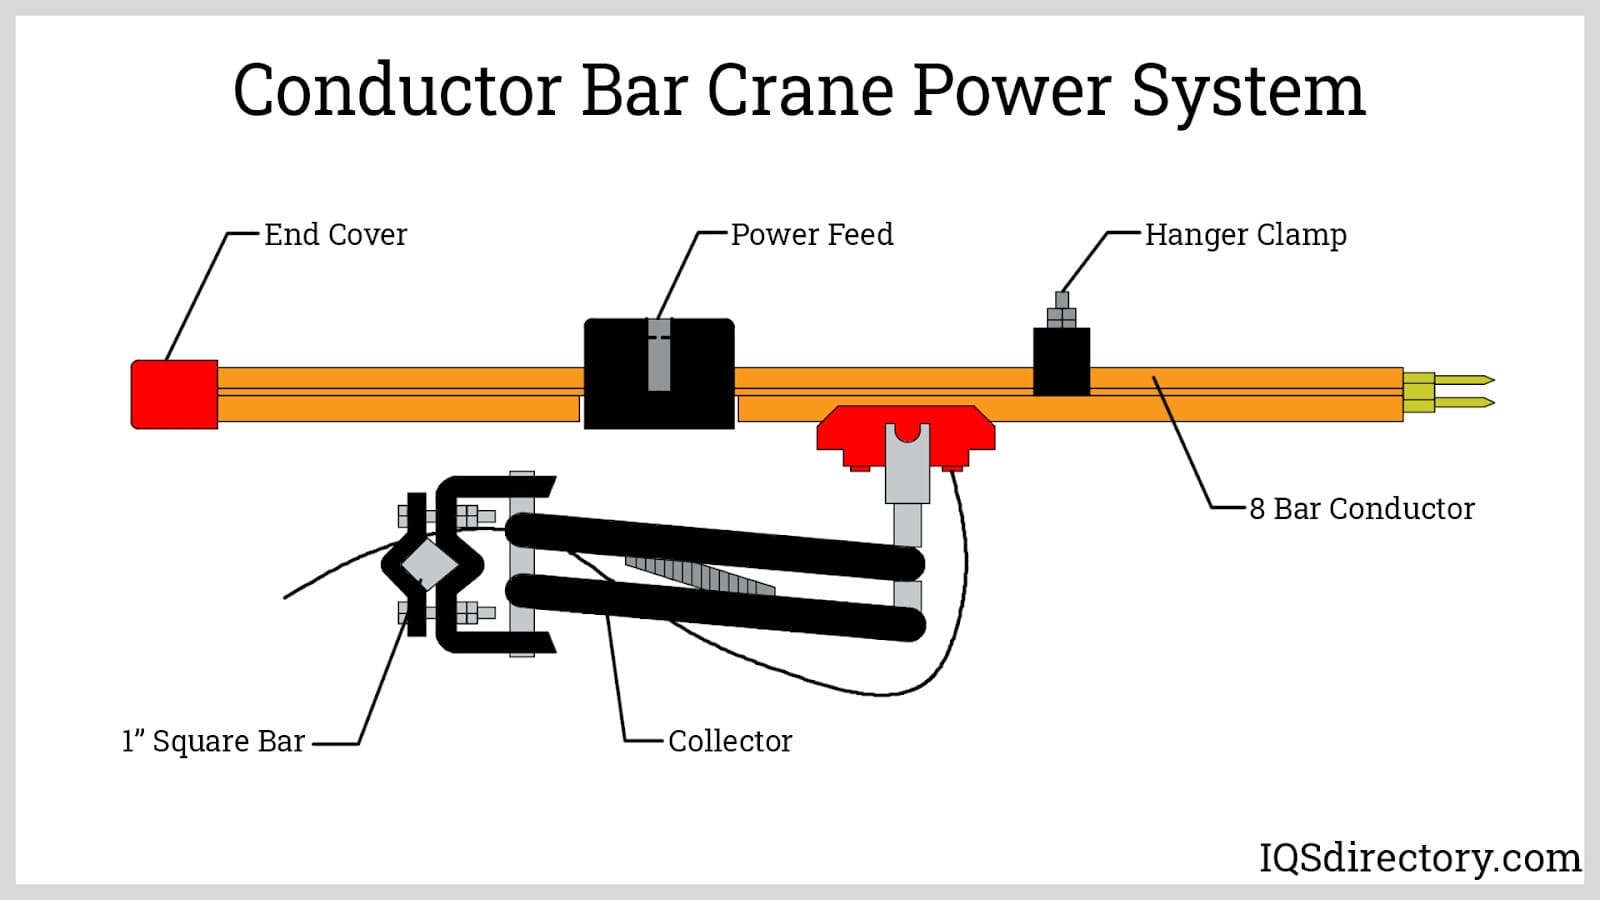 Conductor Bar Crane Power System